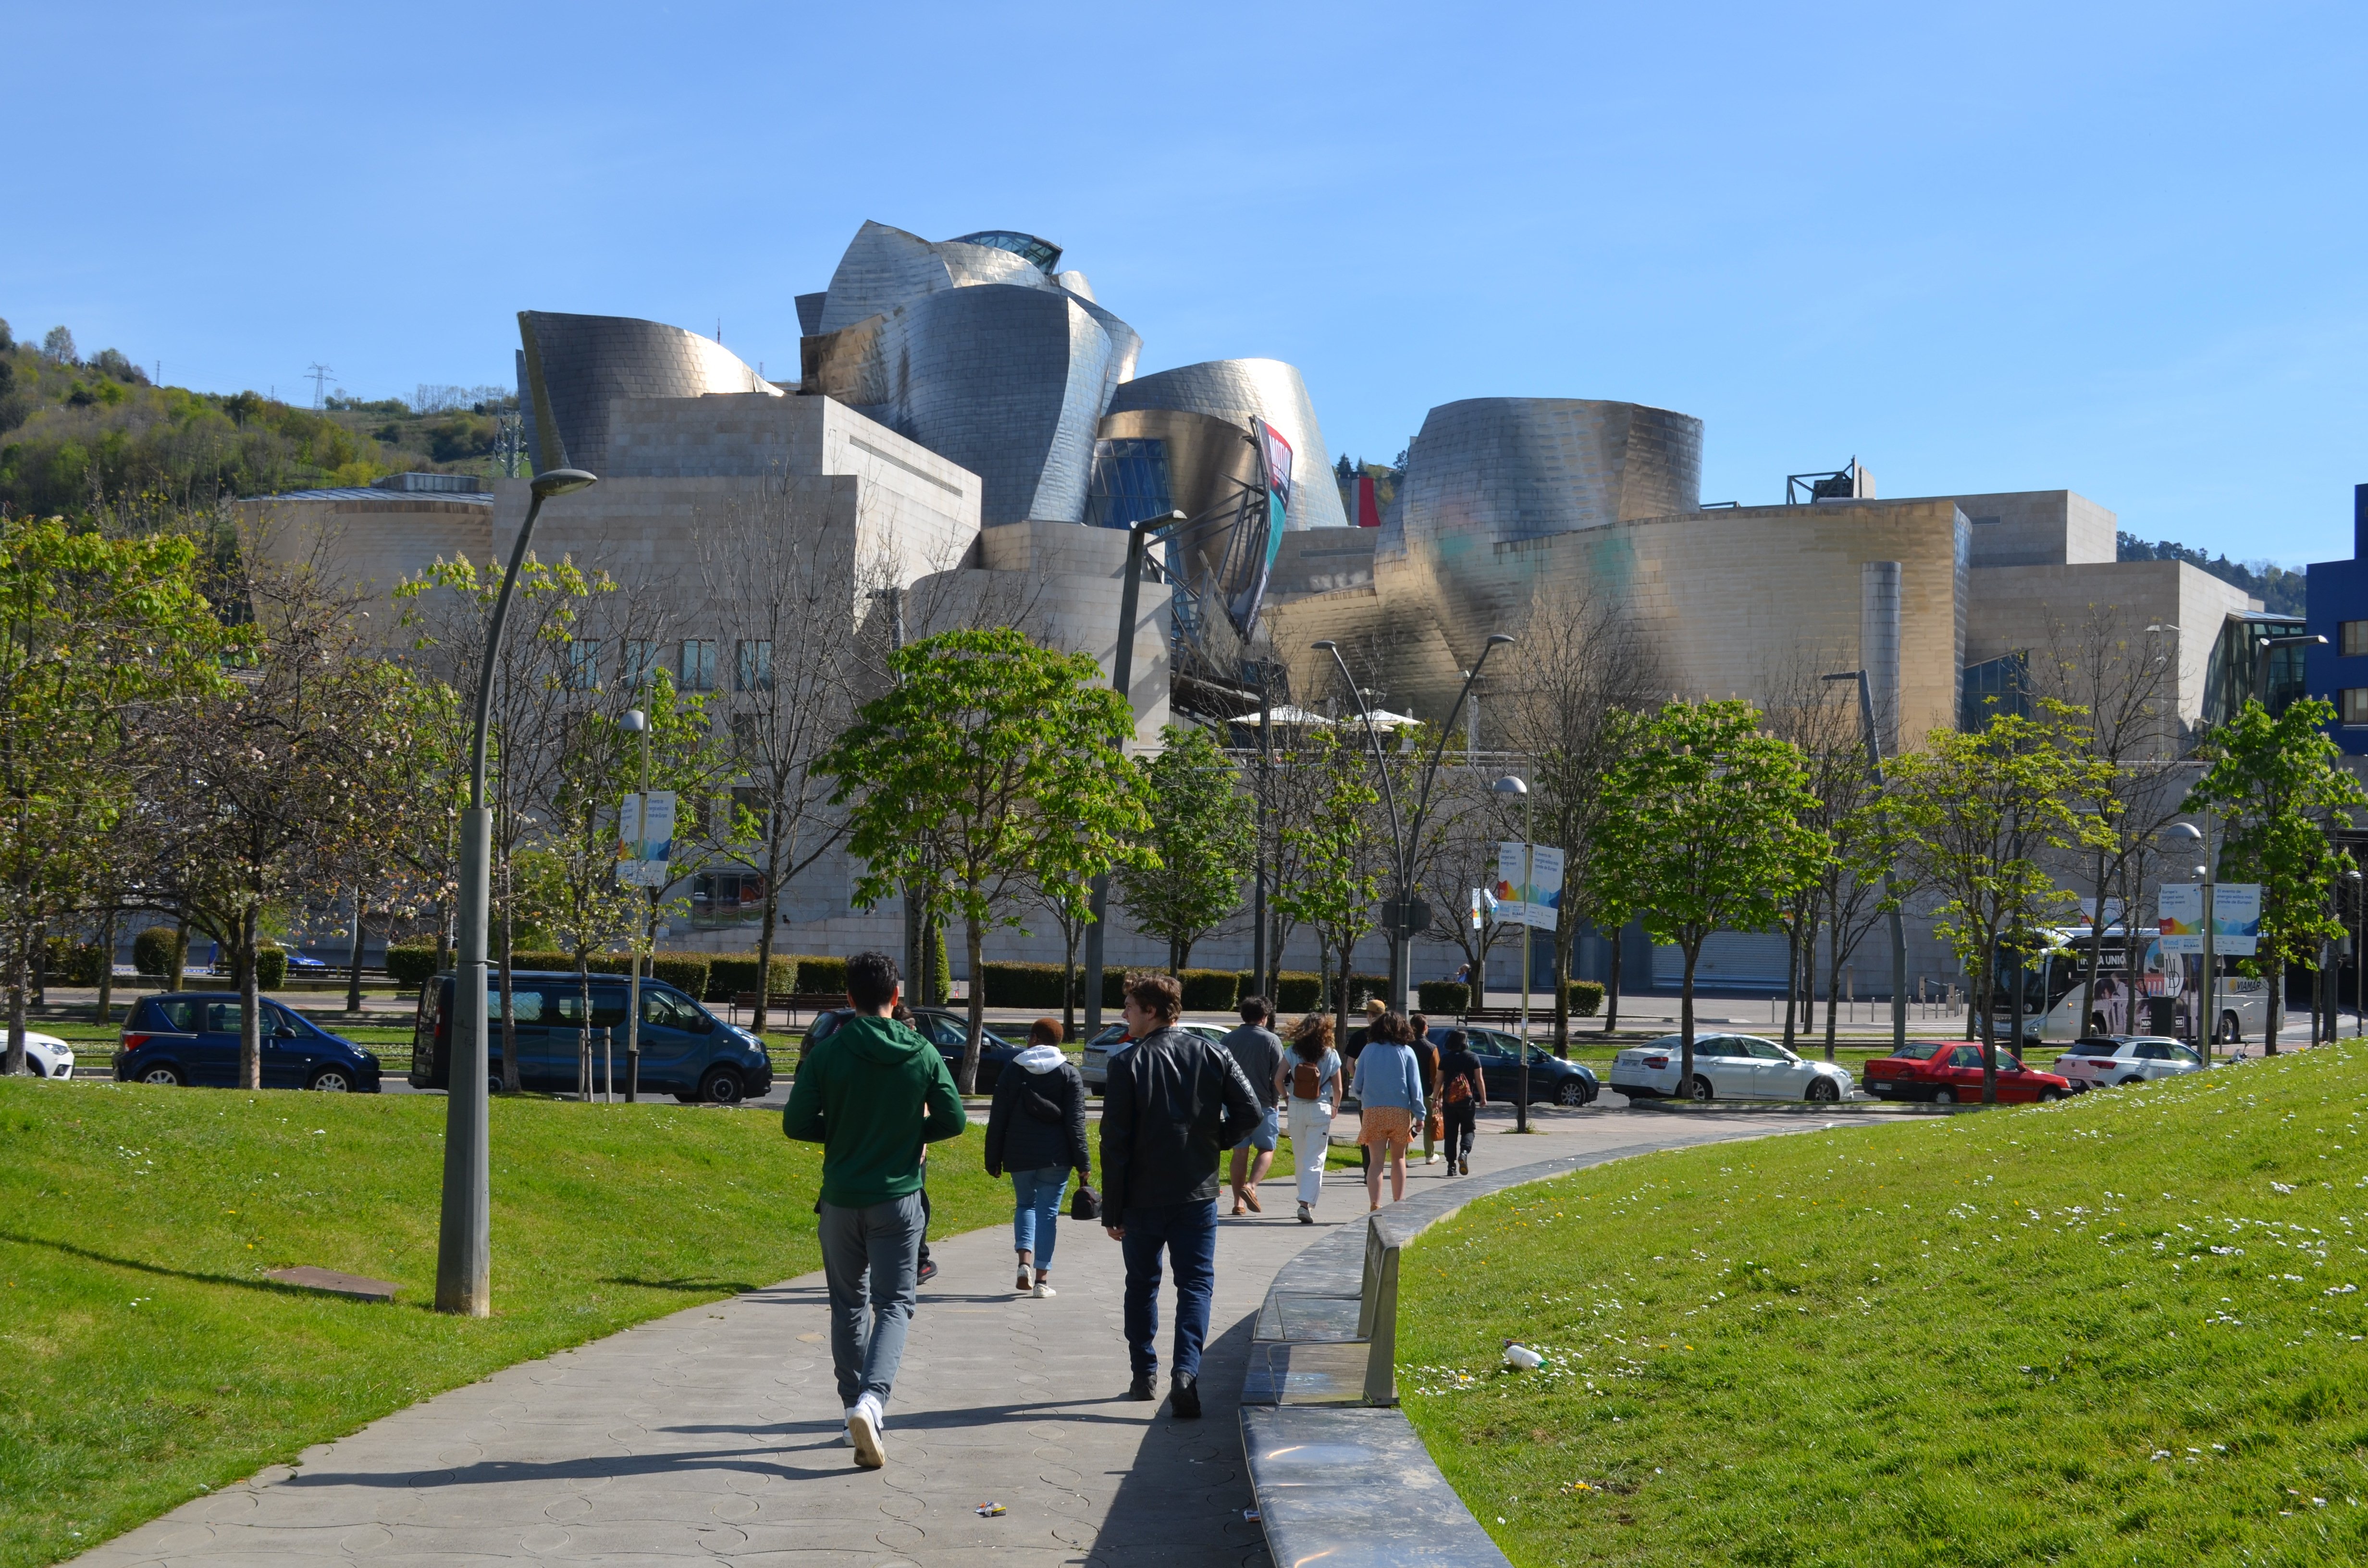 Proctor students visit the Guggenheim museum in Bilbao